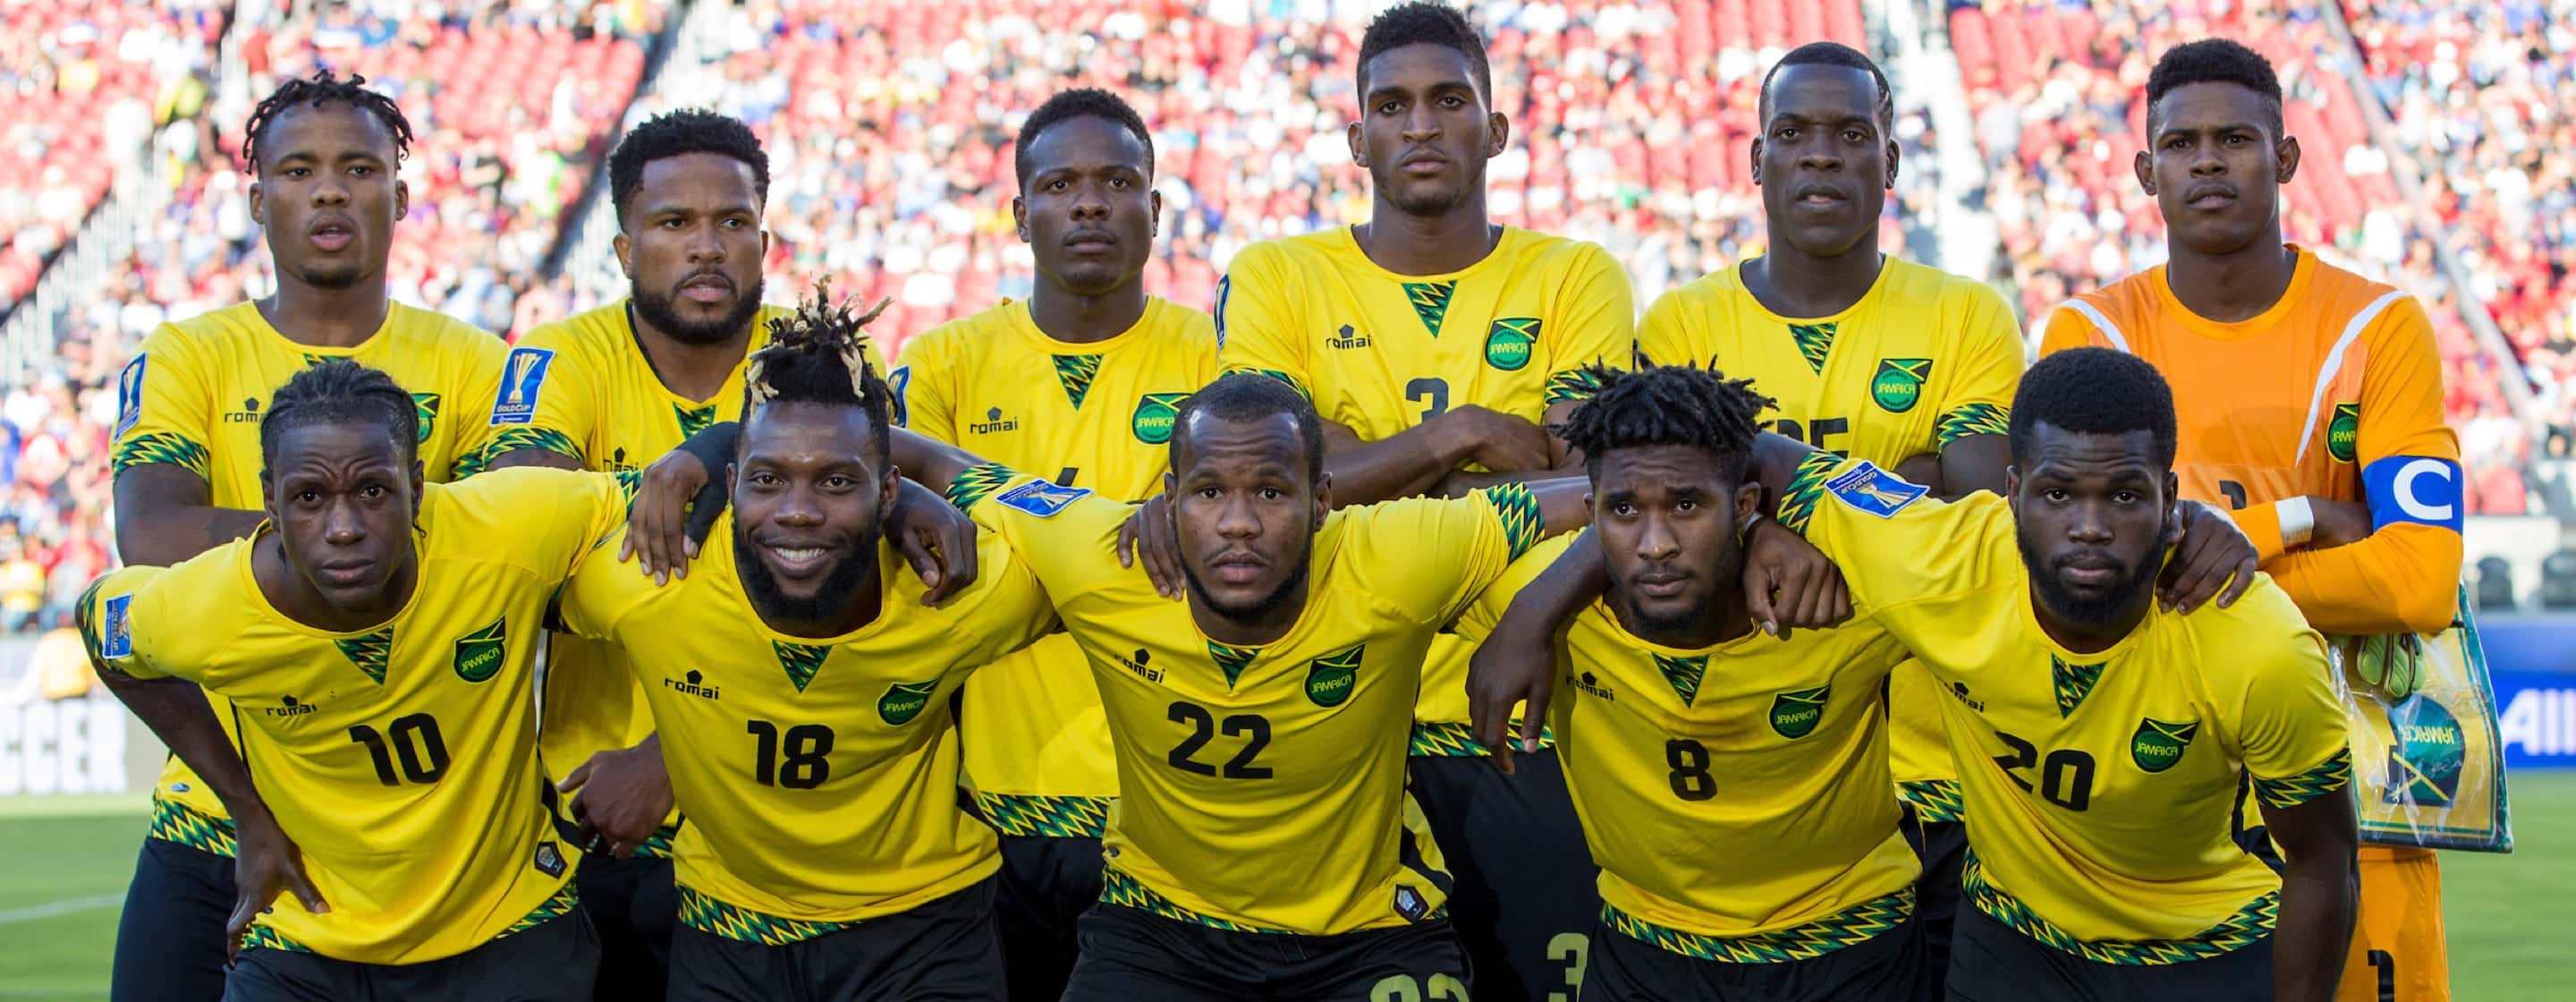 jamaica national football team jersey